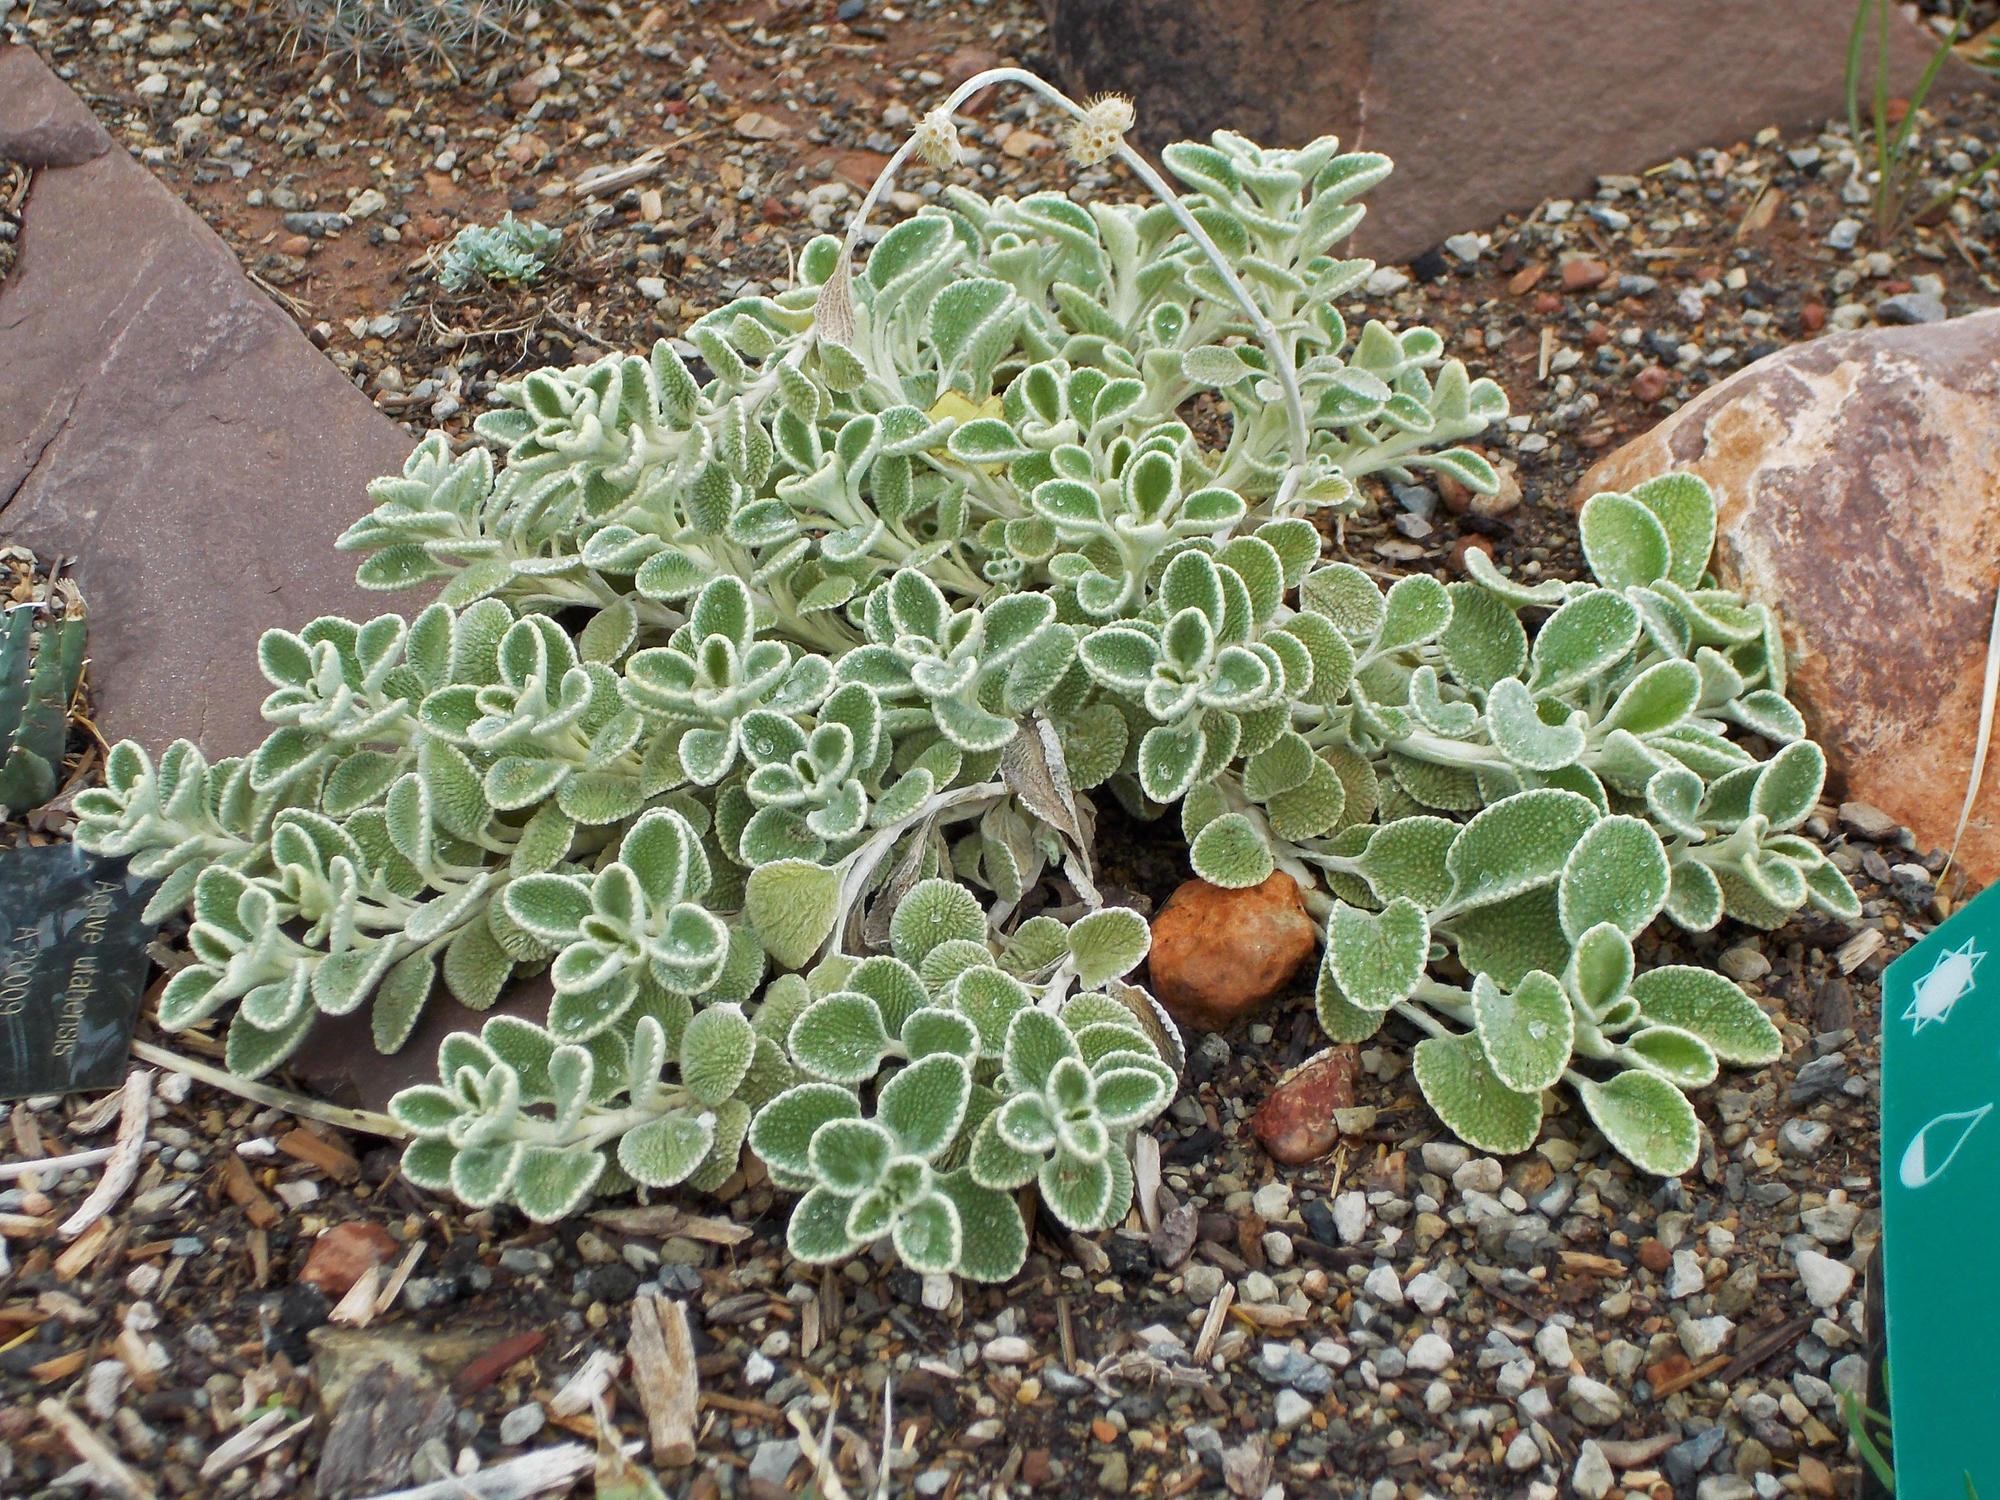 A silver-edged horehound plant.